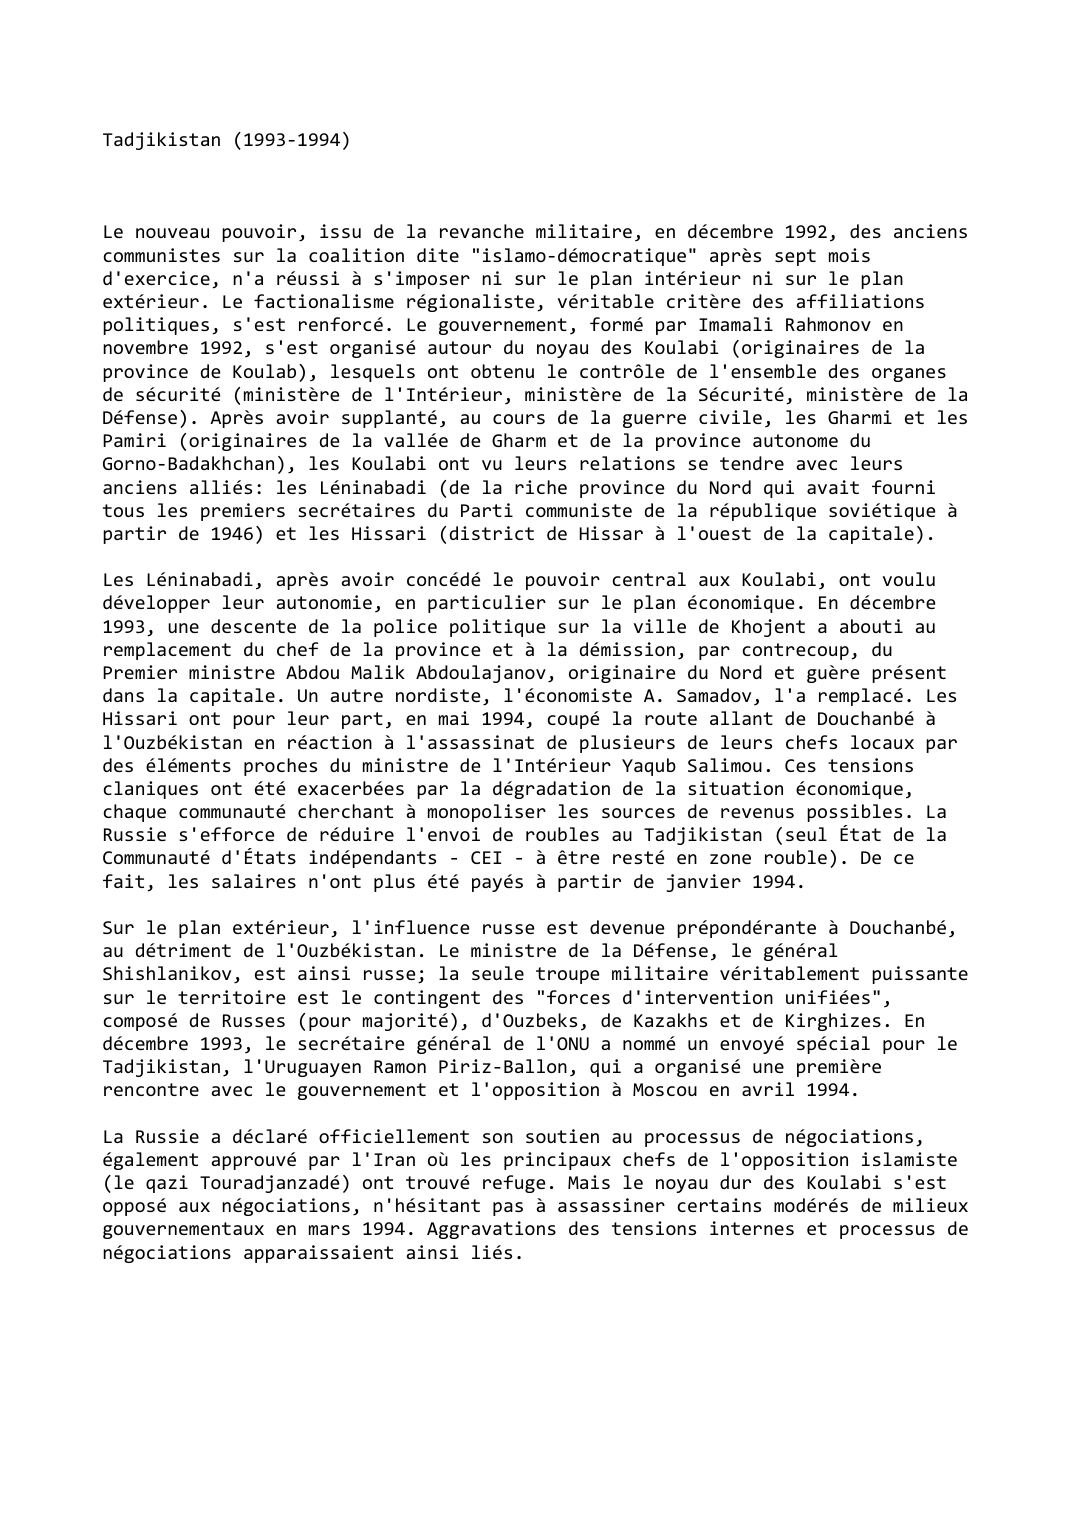 Prévisualisation du document Tadjikistan (1993-1994)